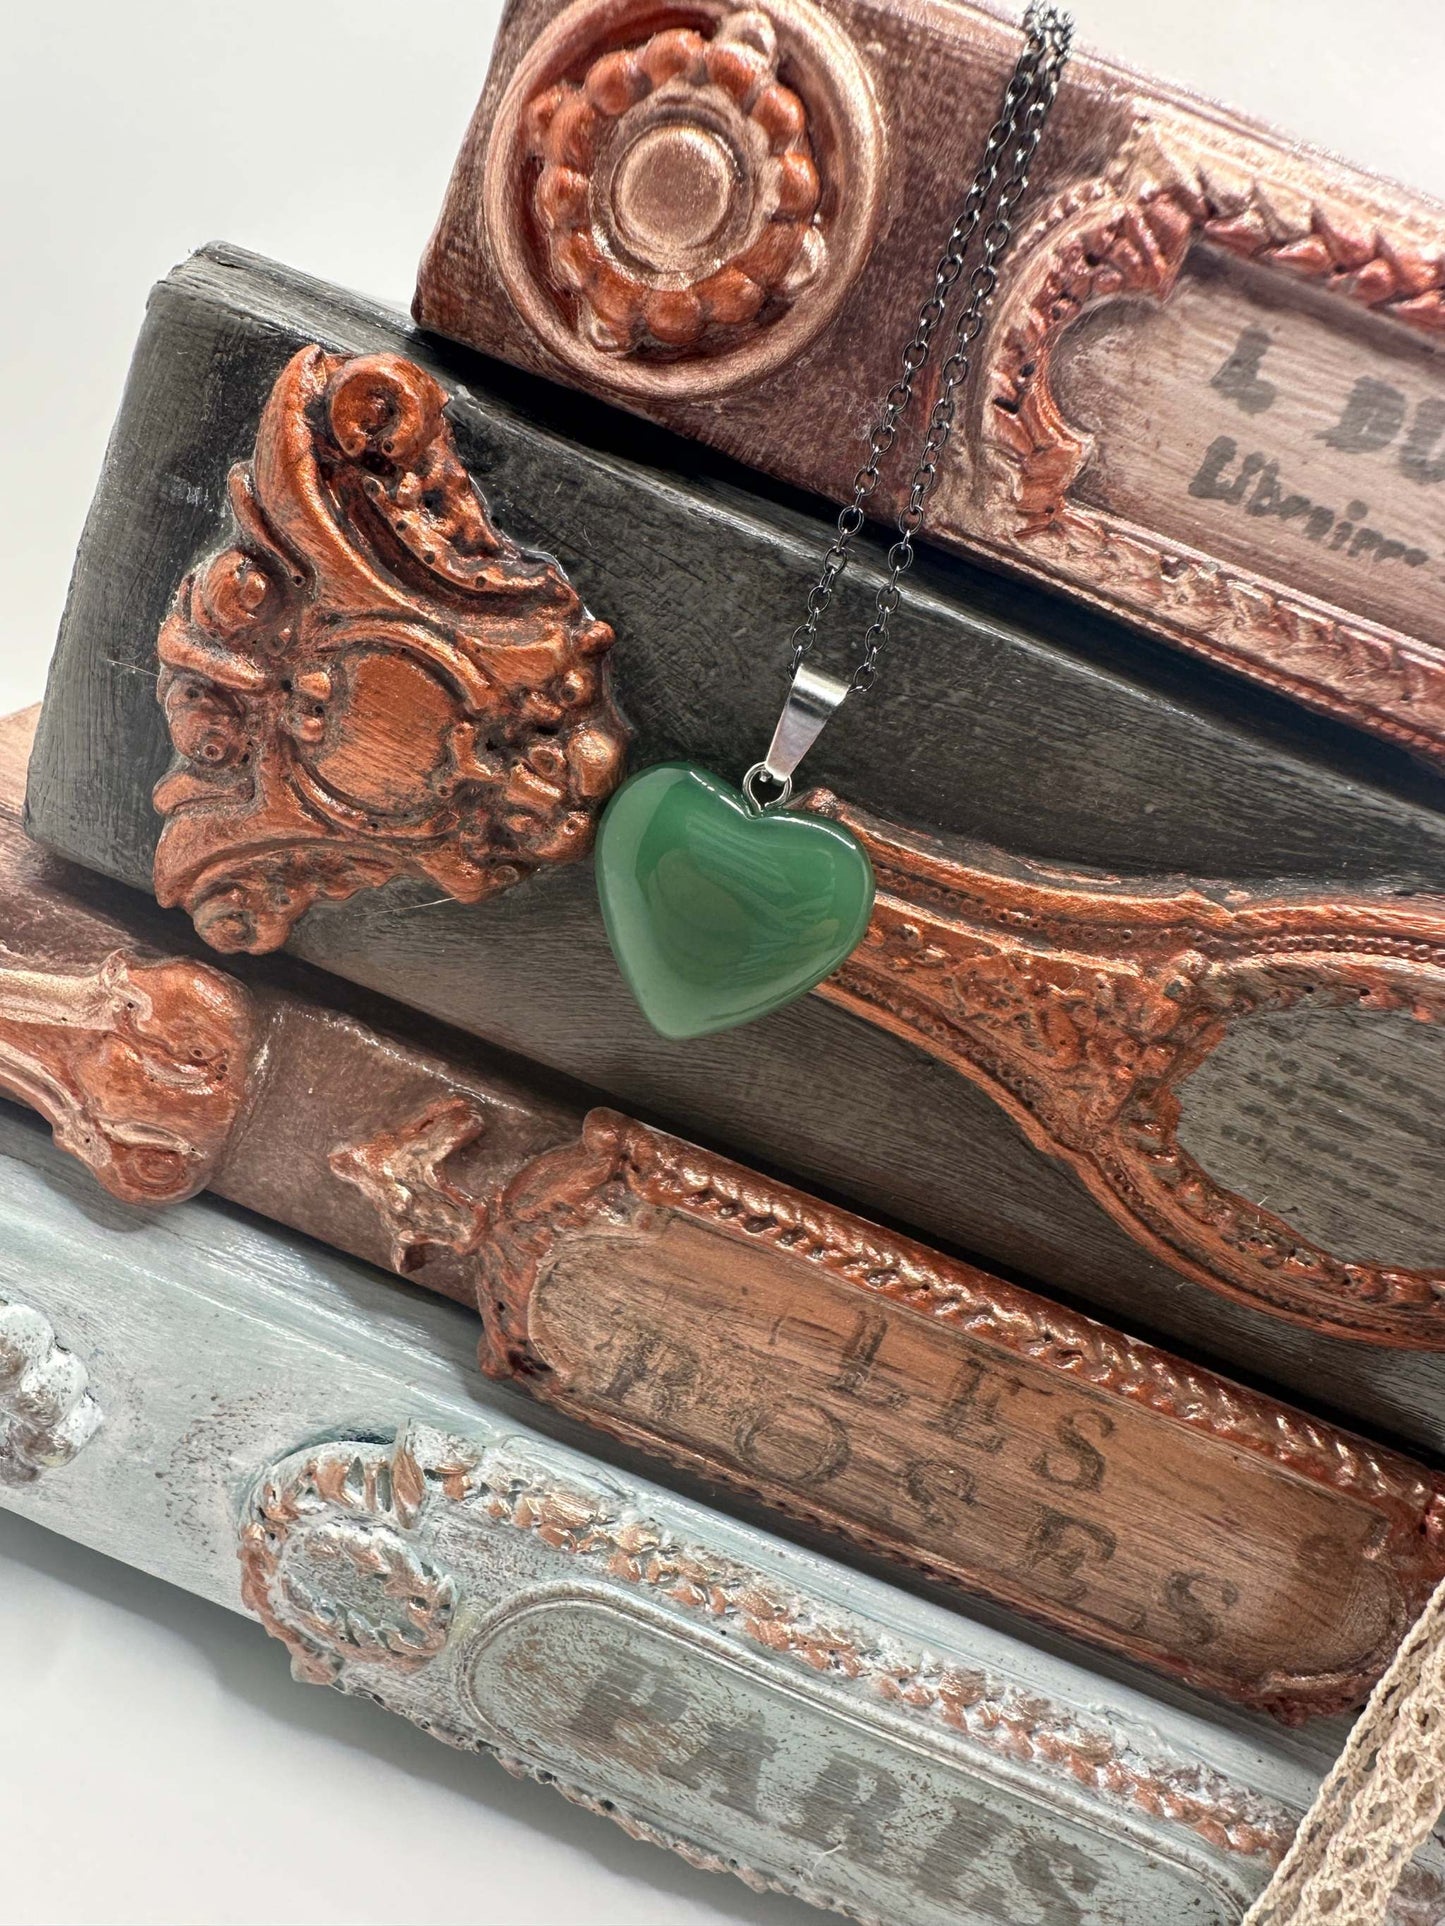 Healing Heart Crystal Pendant Necklace - Green Aventurine